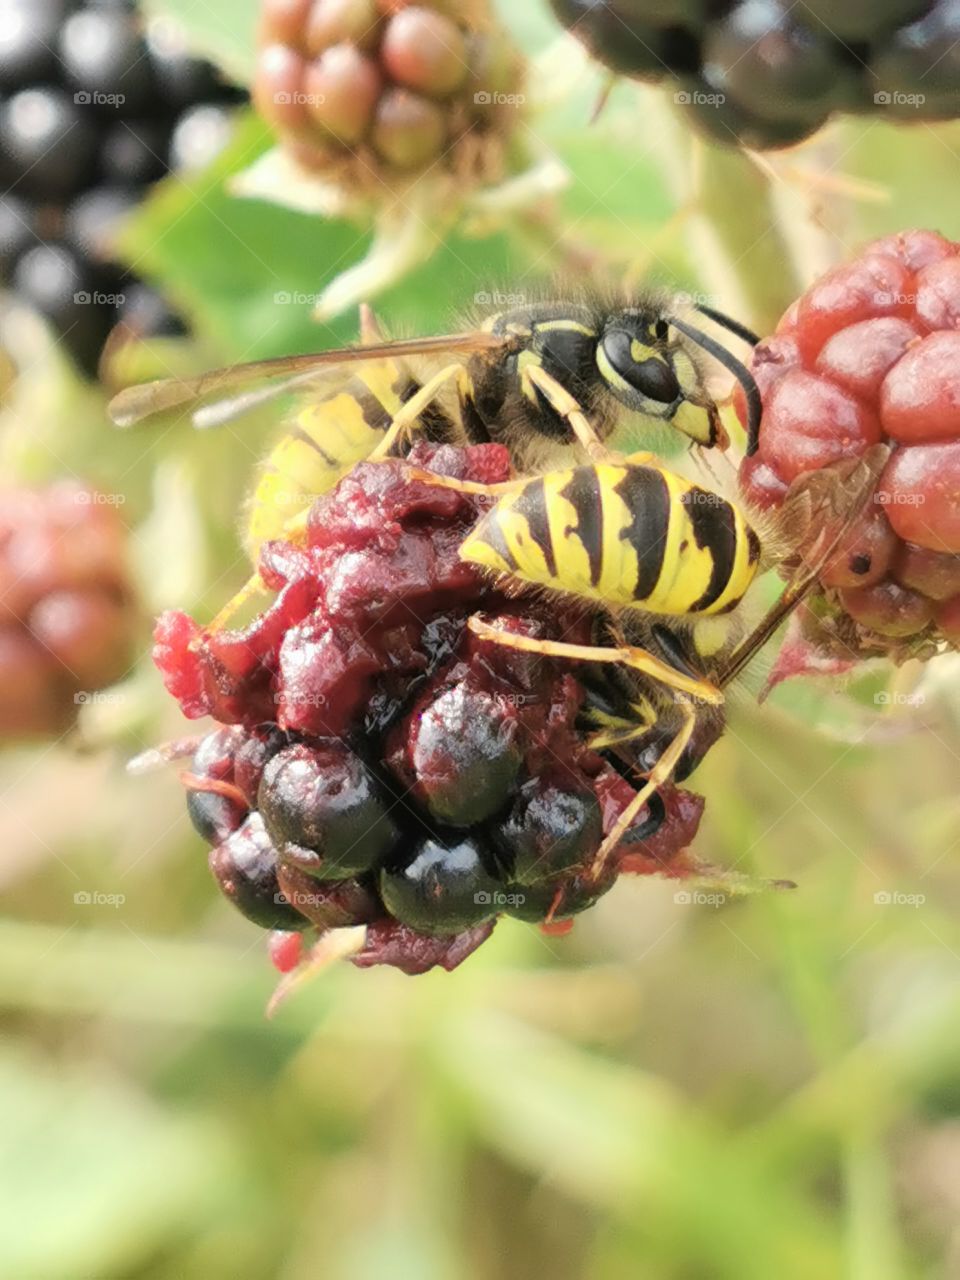 Yellow jacket wasps on blackberry